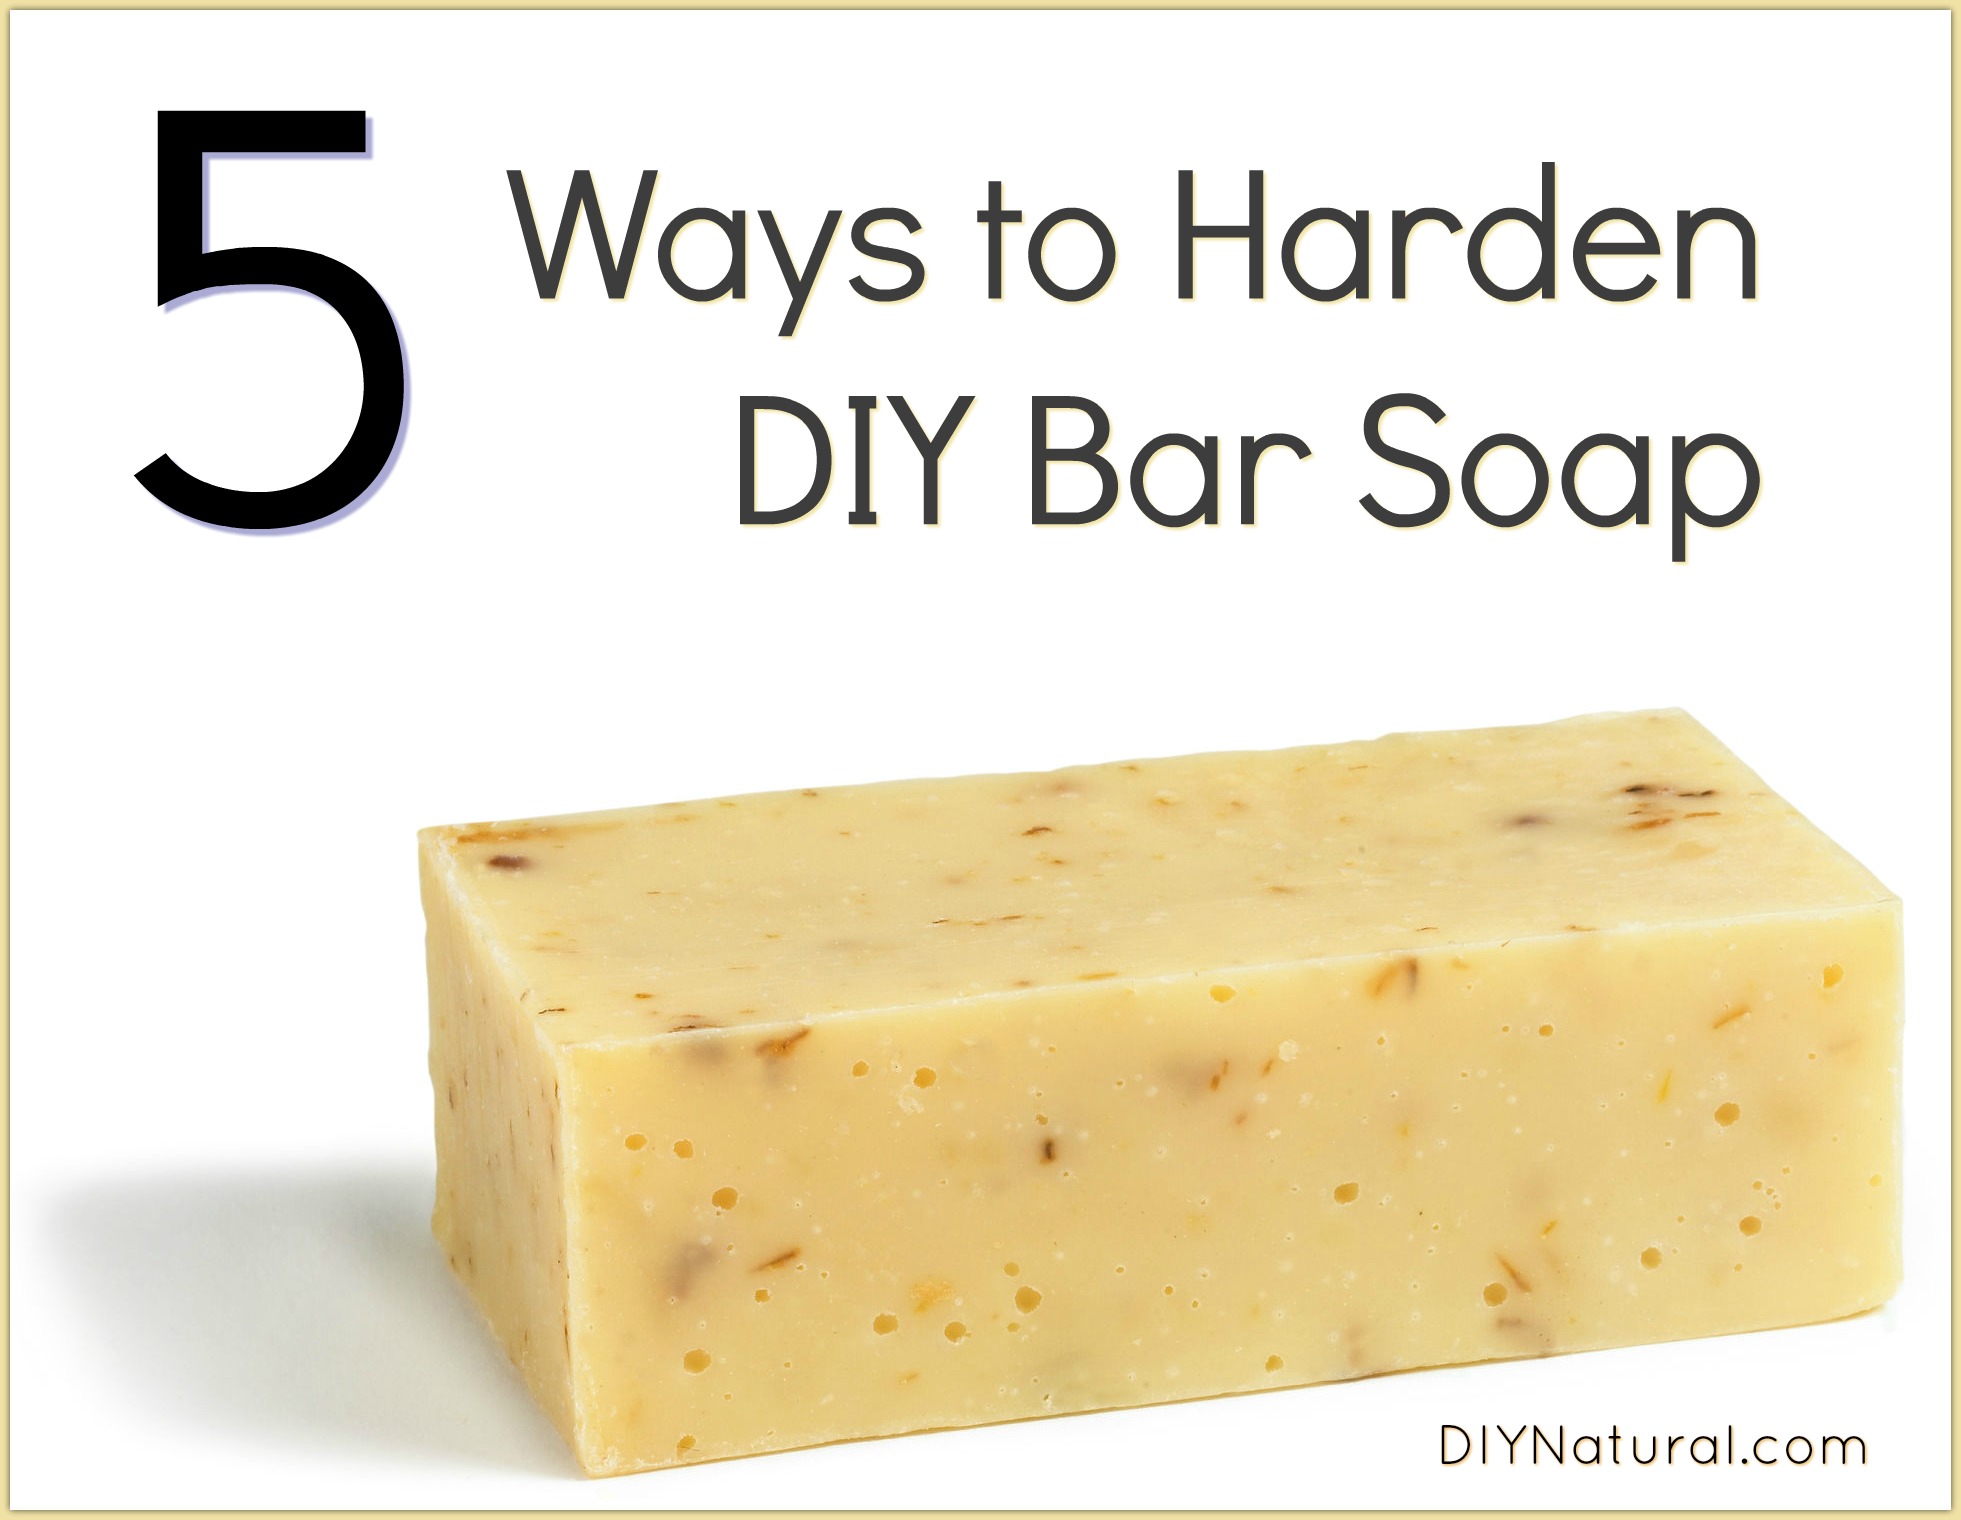 DIY Bar Soap: 5 Ways To Make Homemade